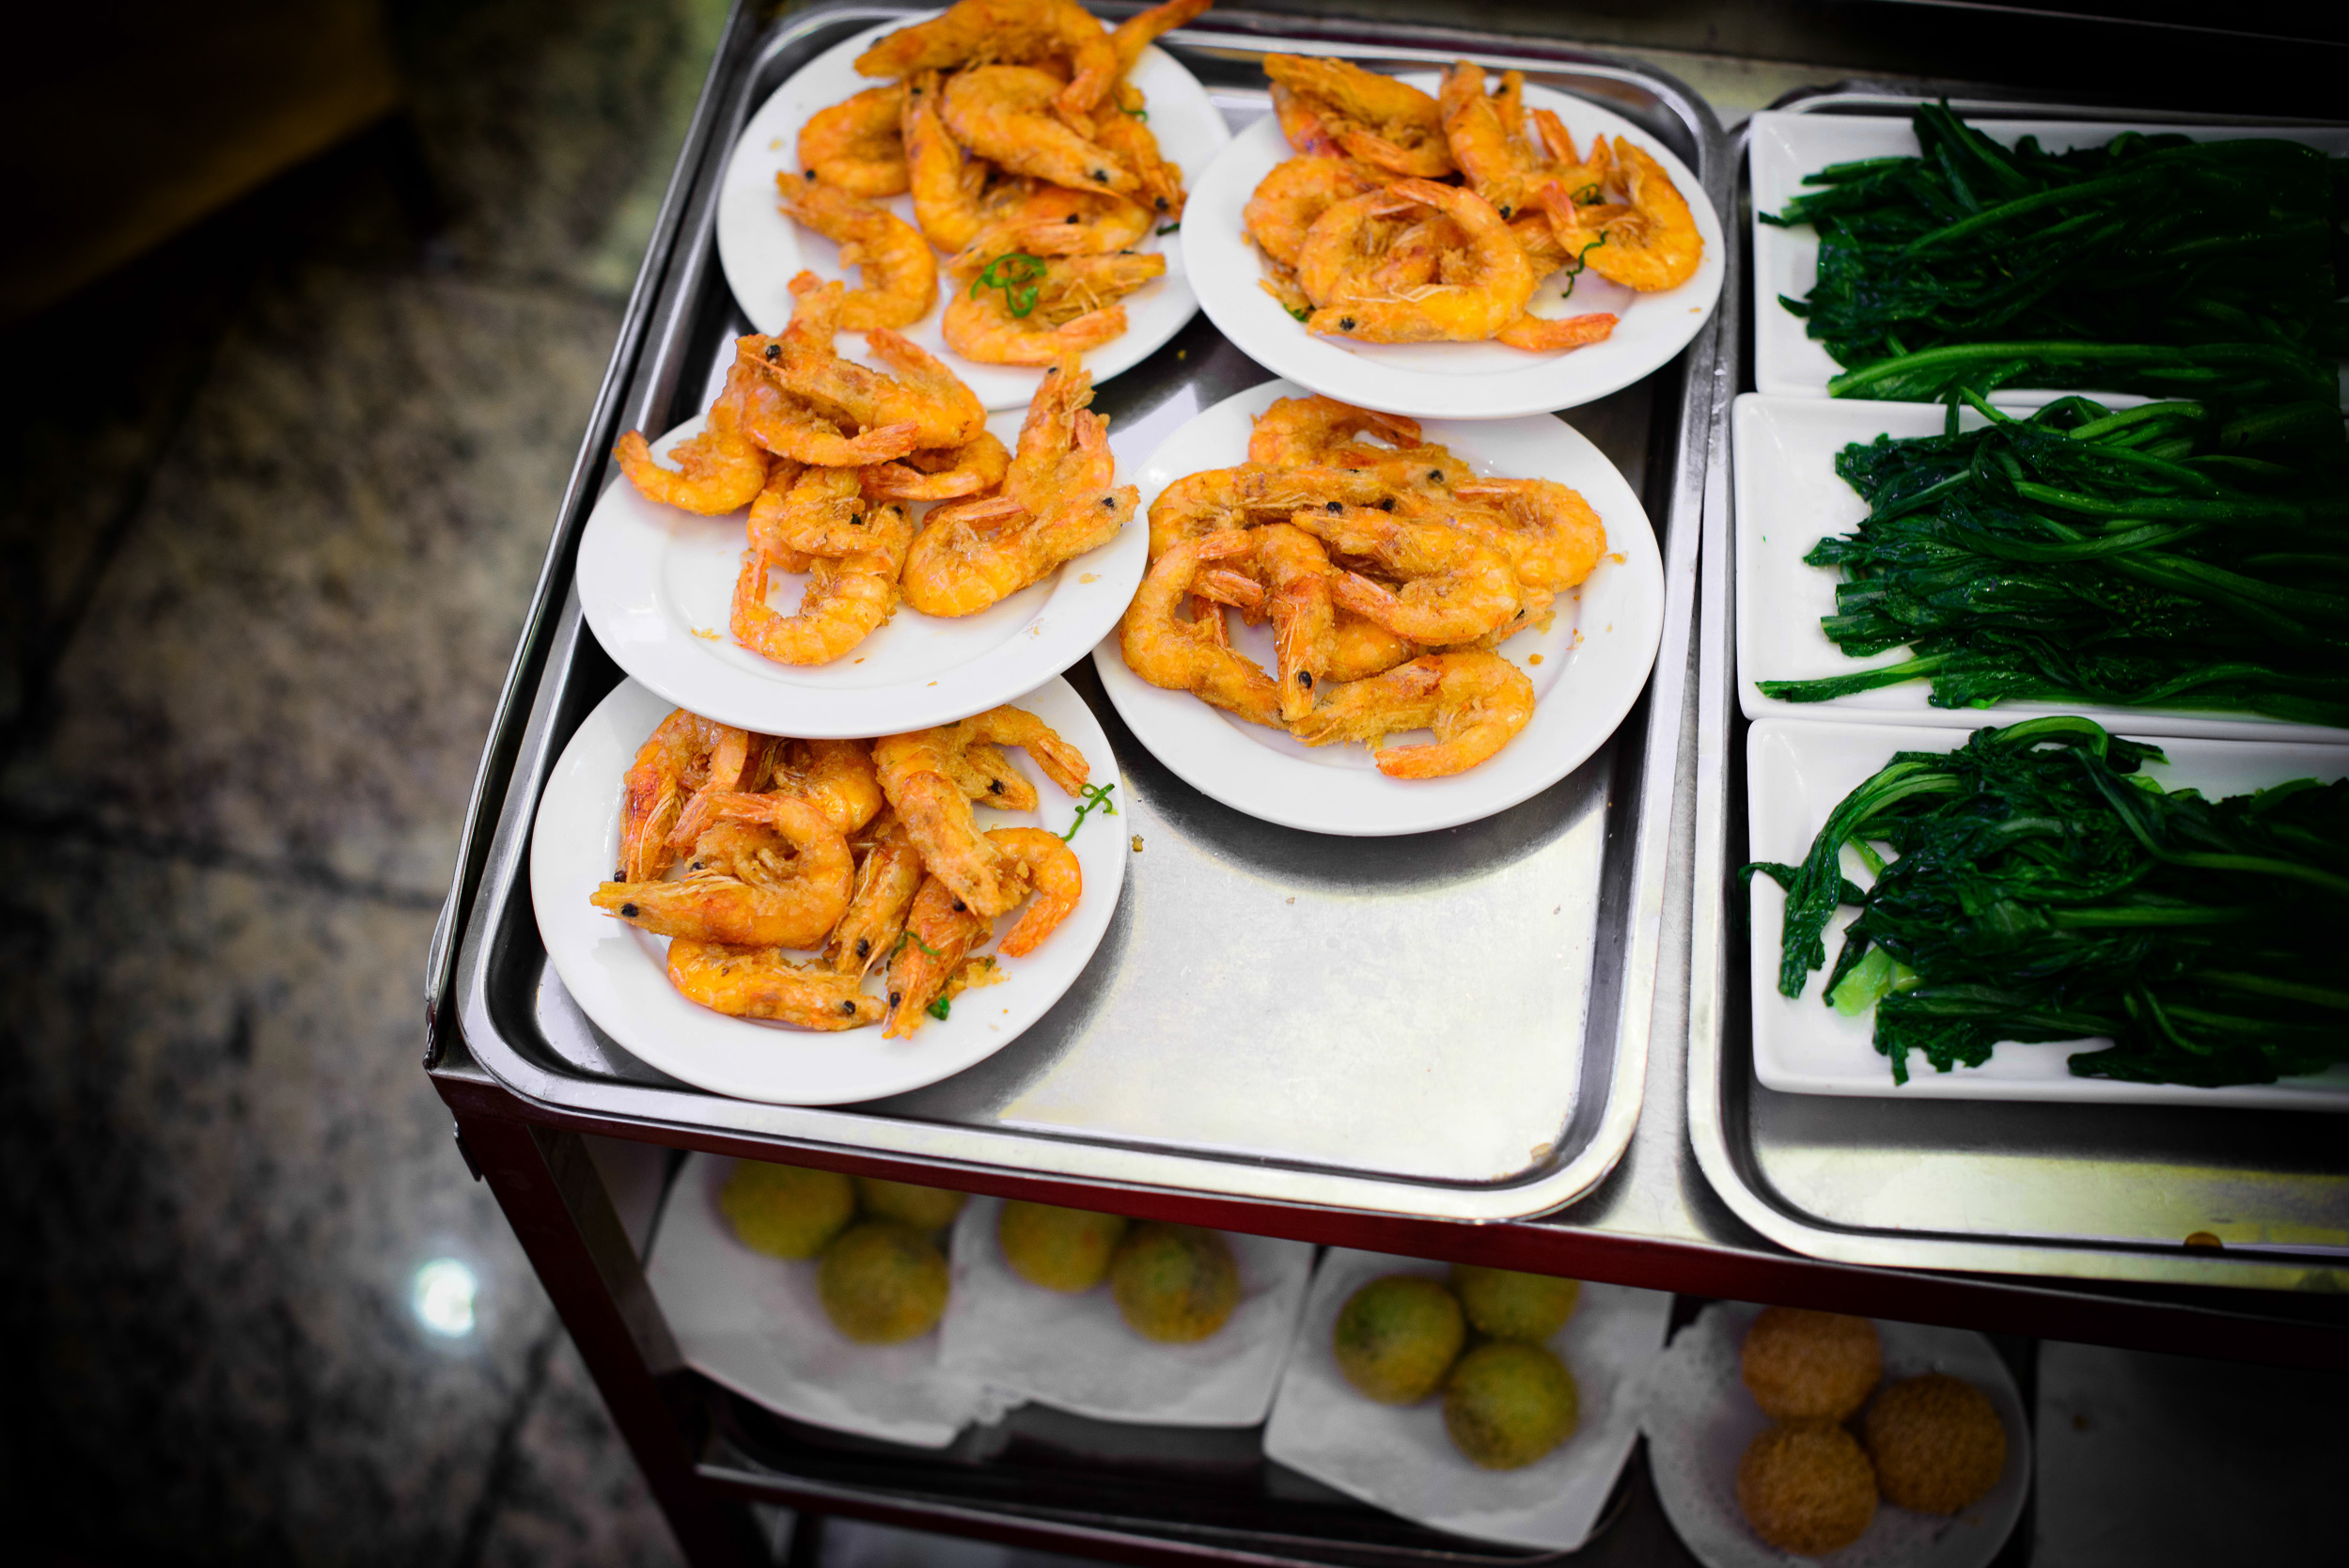 Deep-fried shrimp, Chinese broccoli, pork buns